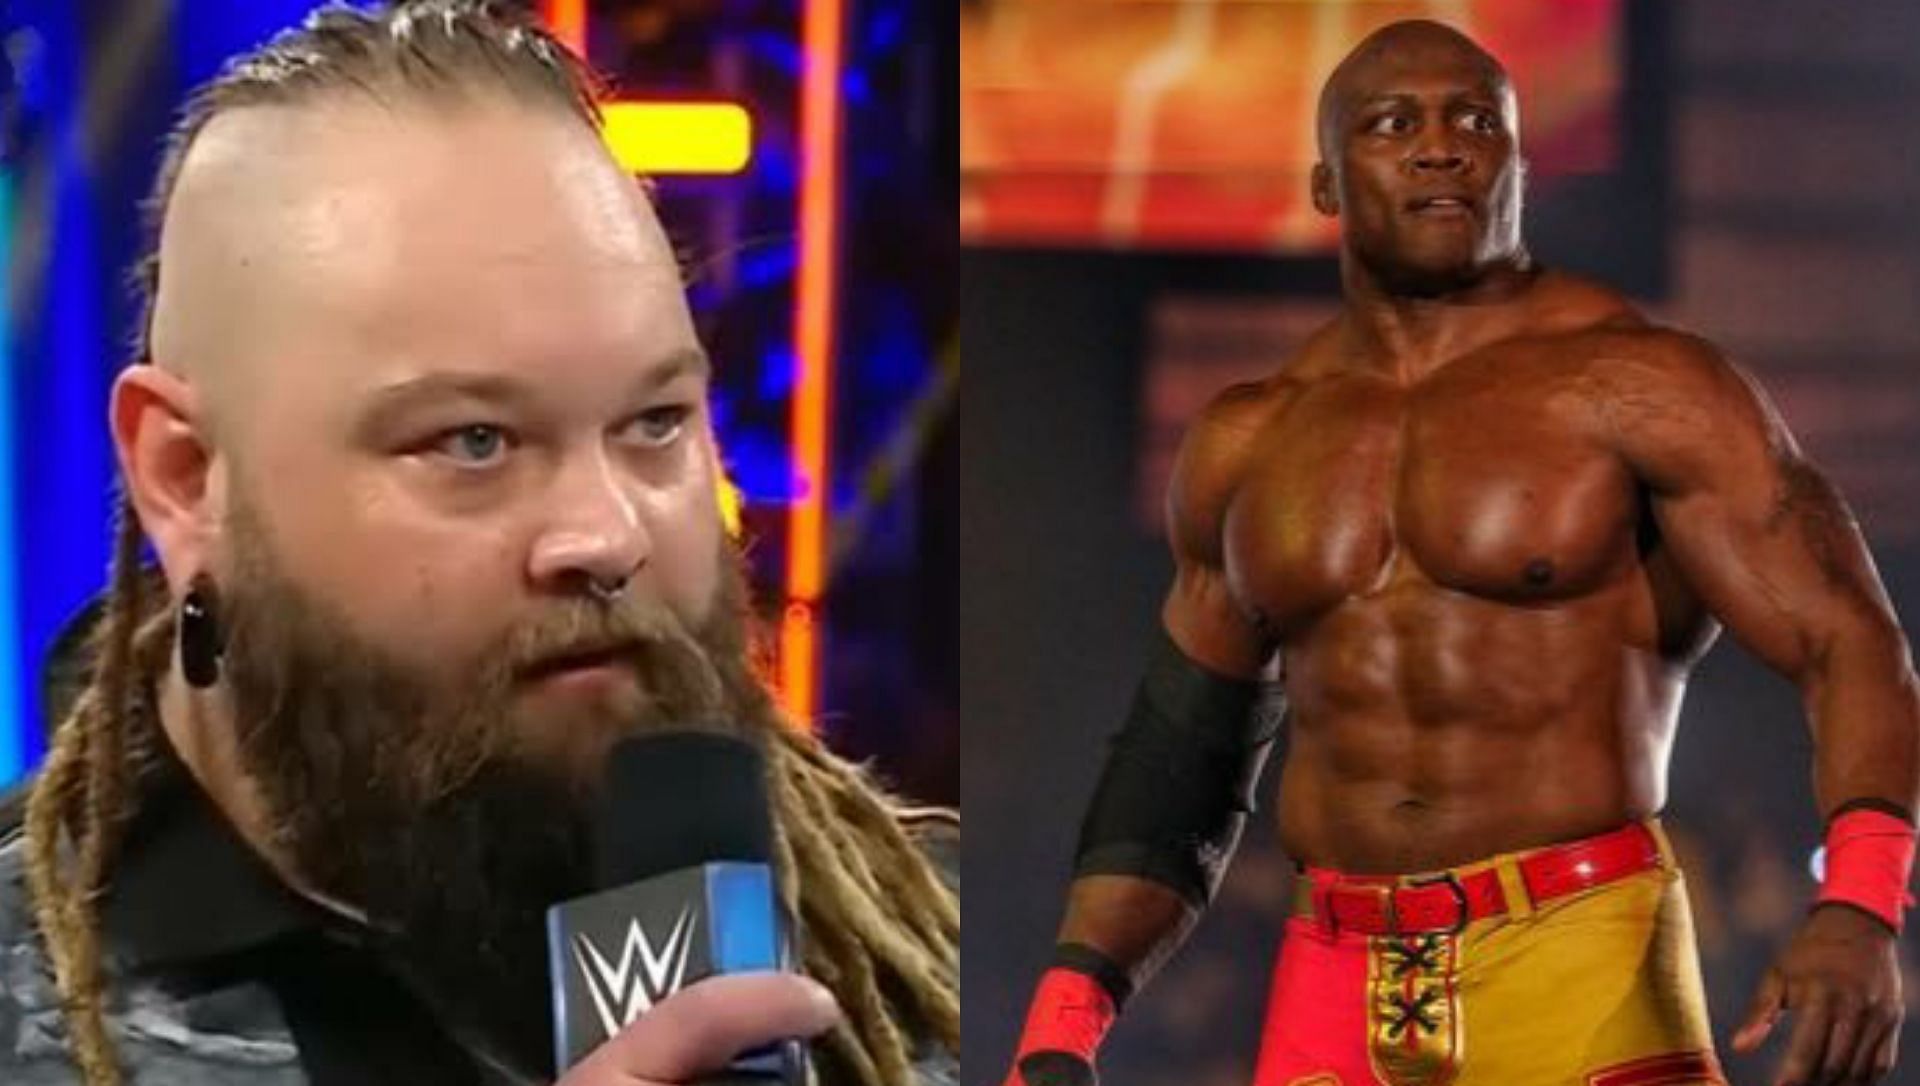 Where is Bray Wyatt? WWE WrestleMania 39 plans in serious jeopardy